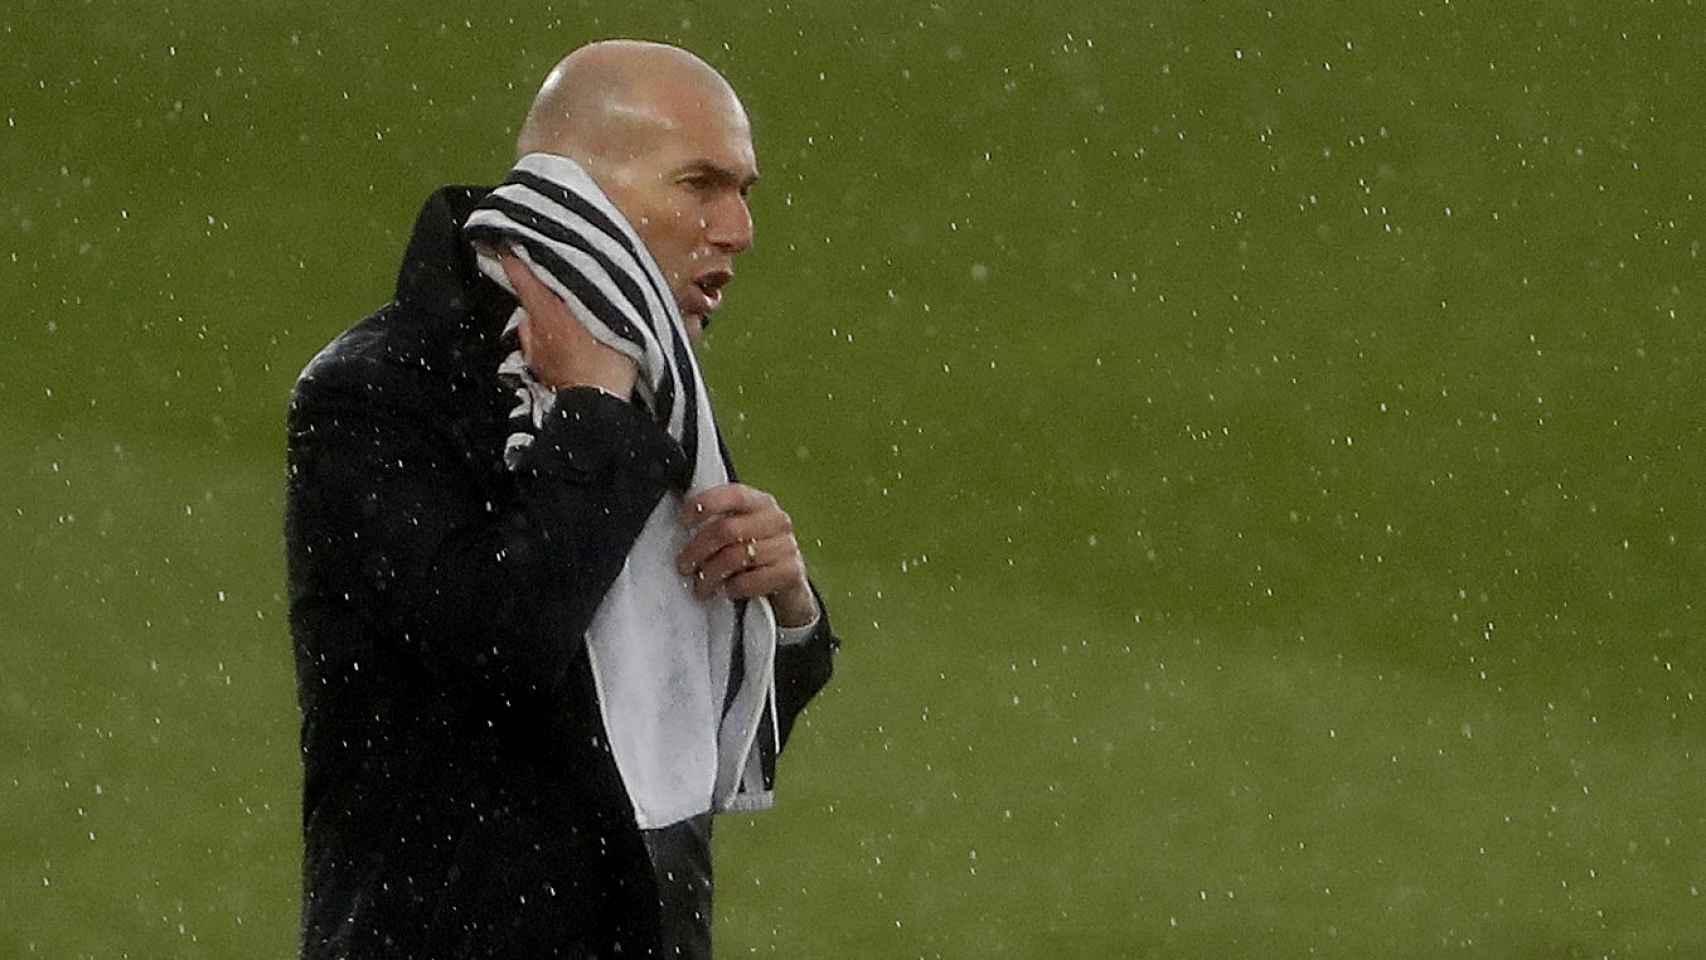 Zidane se seca con una toalla bajo la lluvia